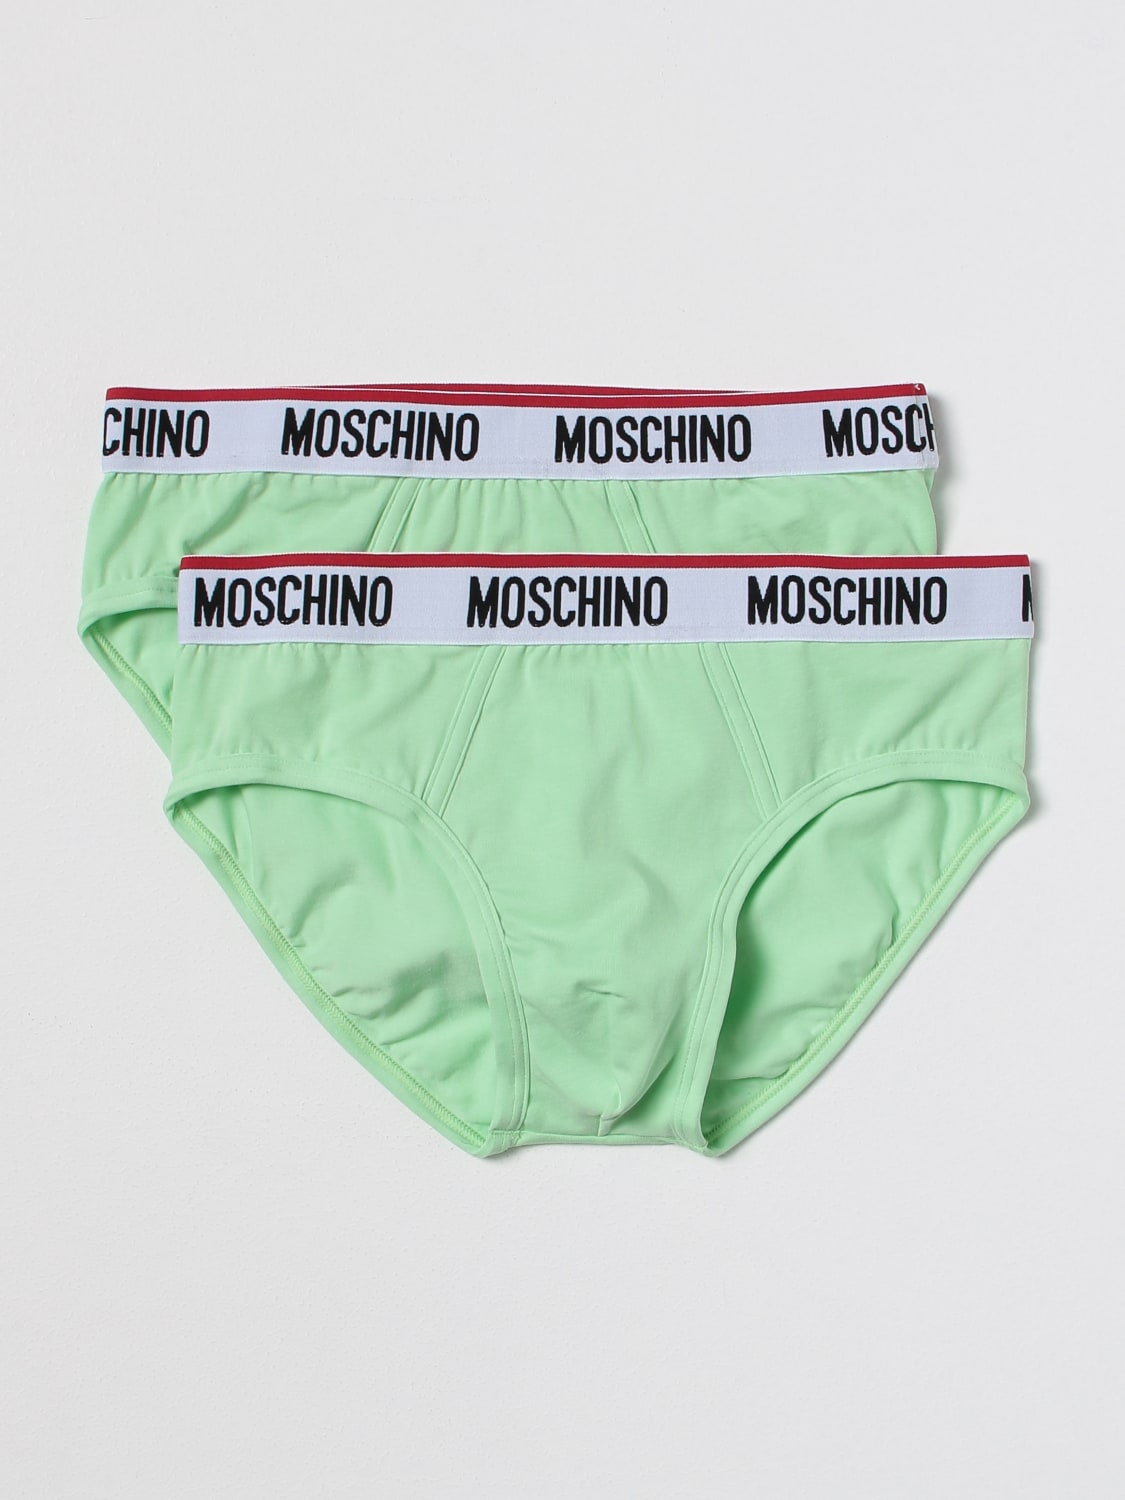 MOSCHINO UNDERWEAR: Ropa interior hombre, Verde | Ropa Interior Moschino Underwear 13924300 línea en GIGLIO.COM